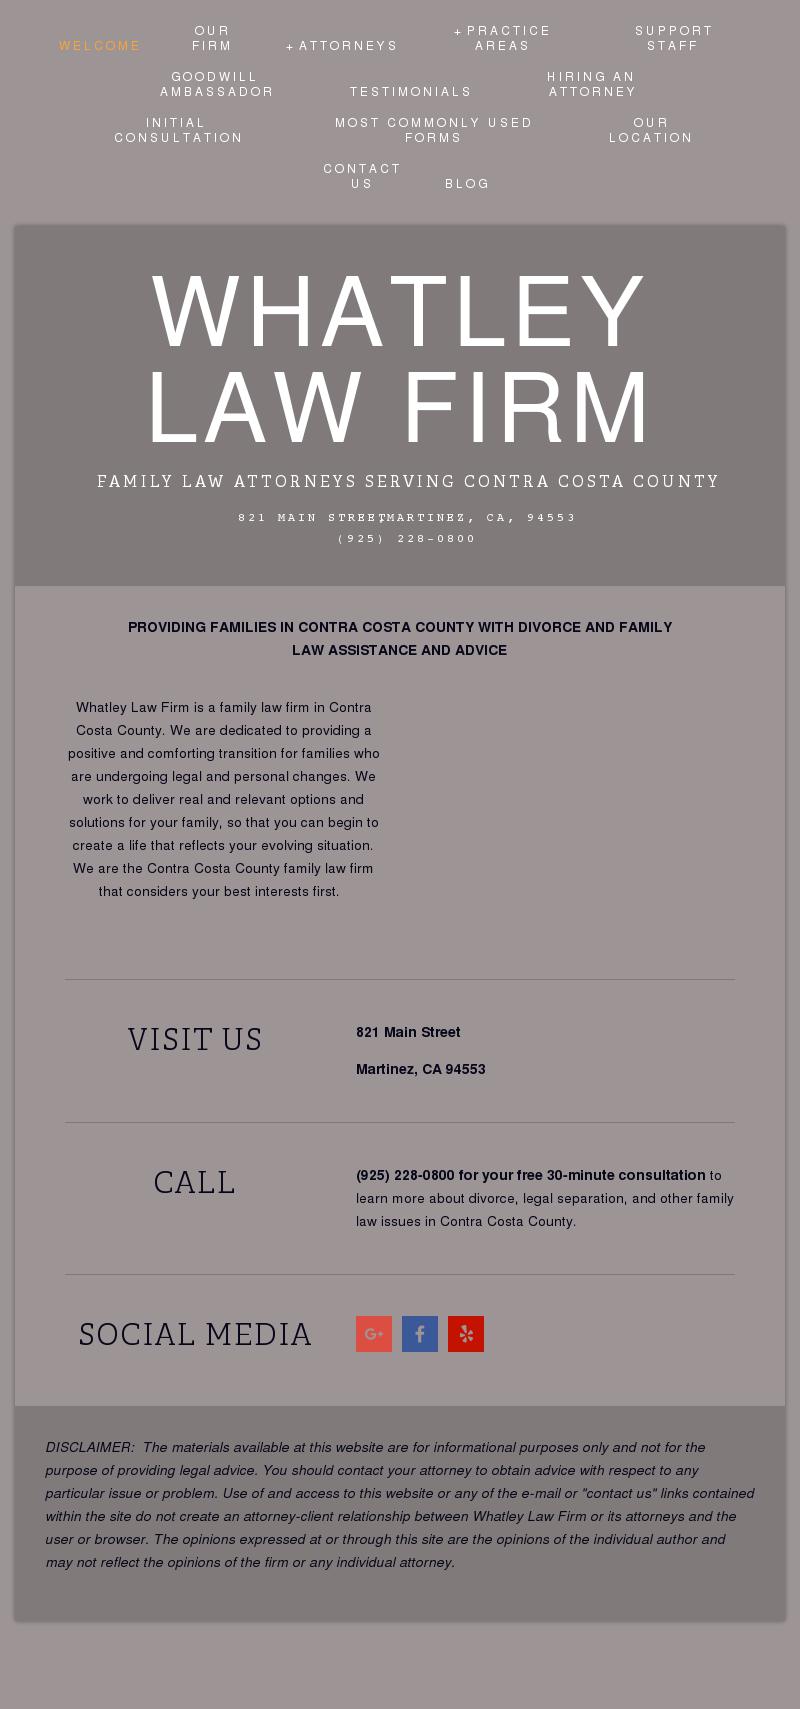 Whatley Law Firm - Martinez CA Lawyers